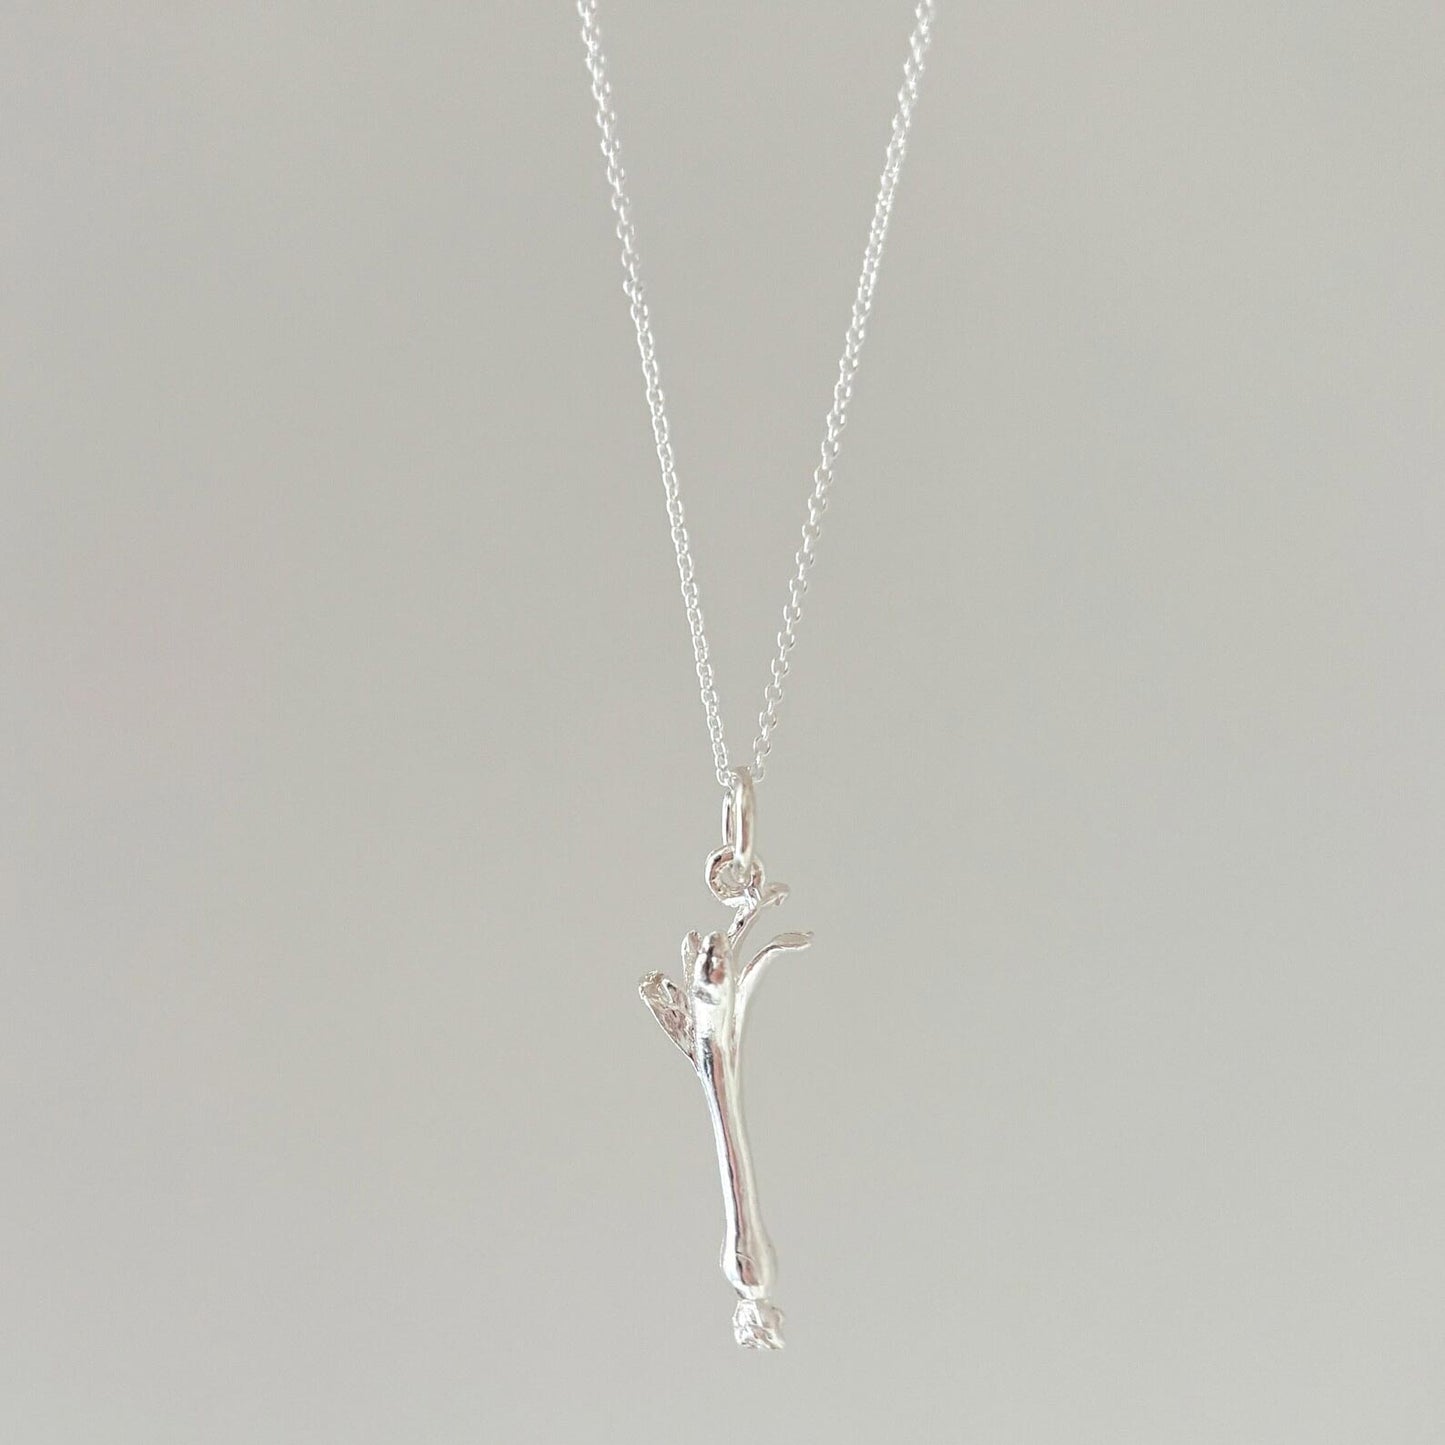 Necklace - Sterling Silver - Welsh Leek - 16" Chain